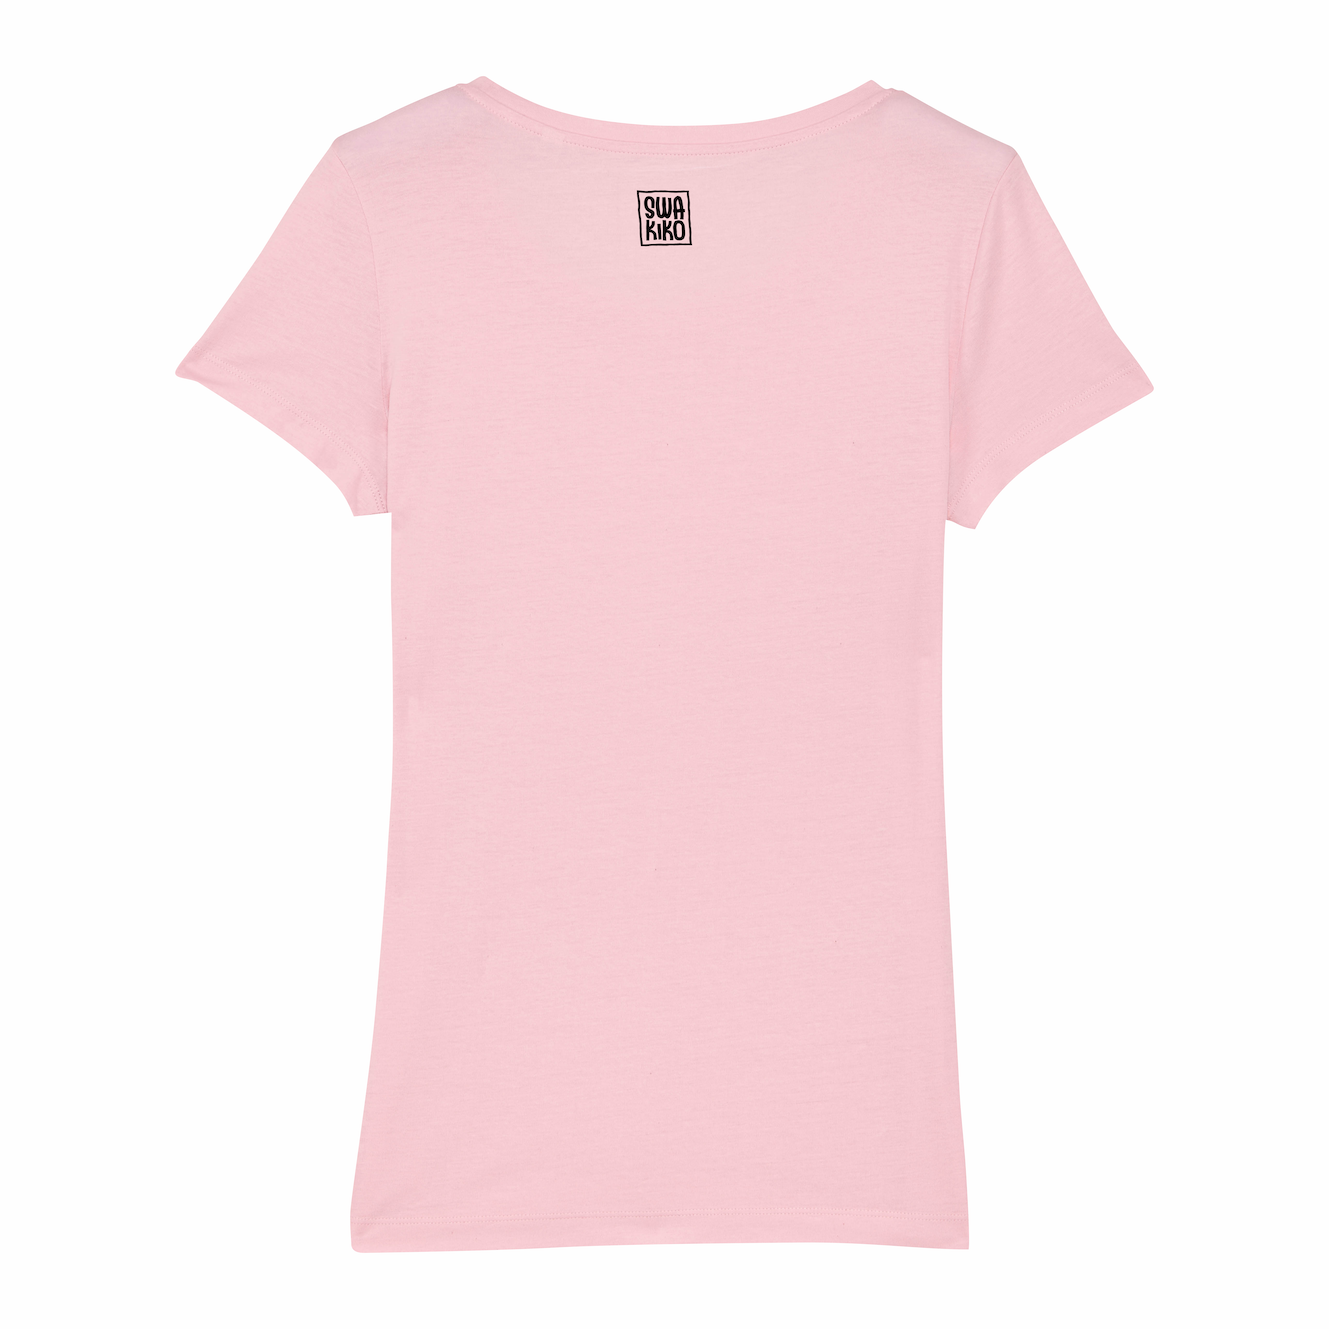 SWAKiKO logo back on pink T-shirt